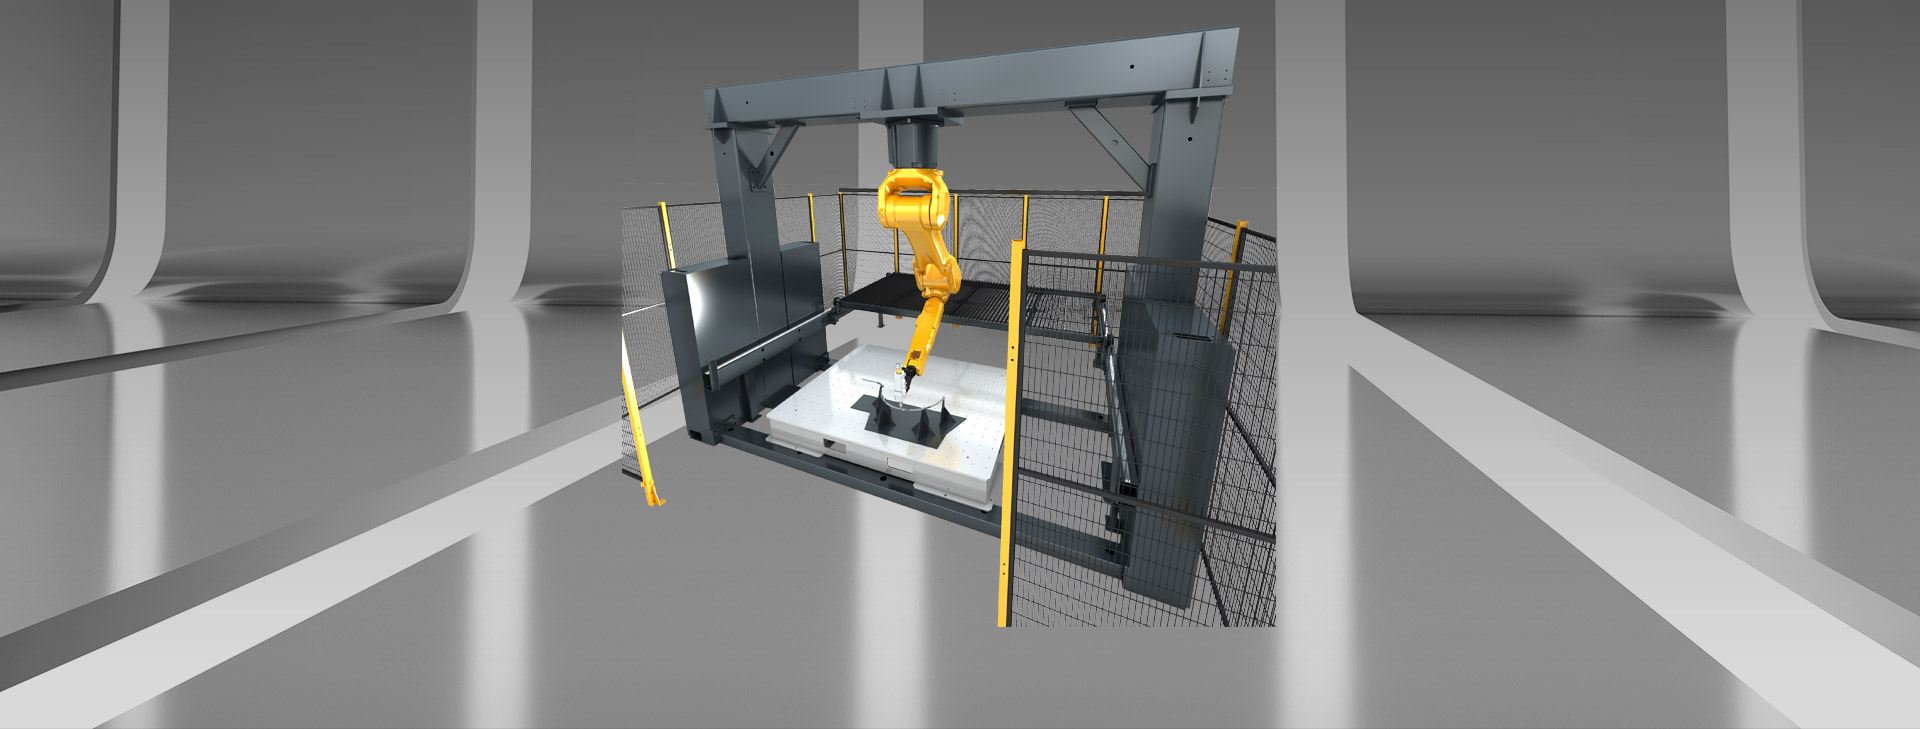 Máquina de corte láser robot 3D con estructura de pórtico